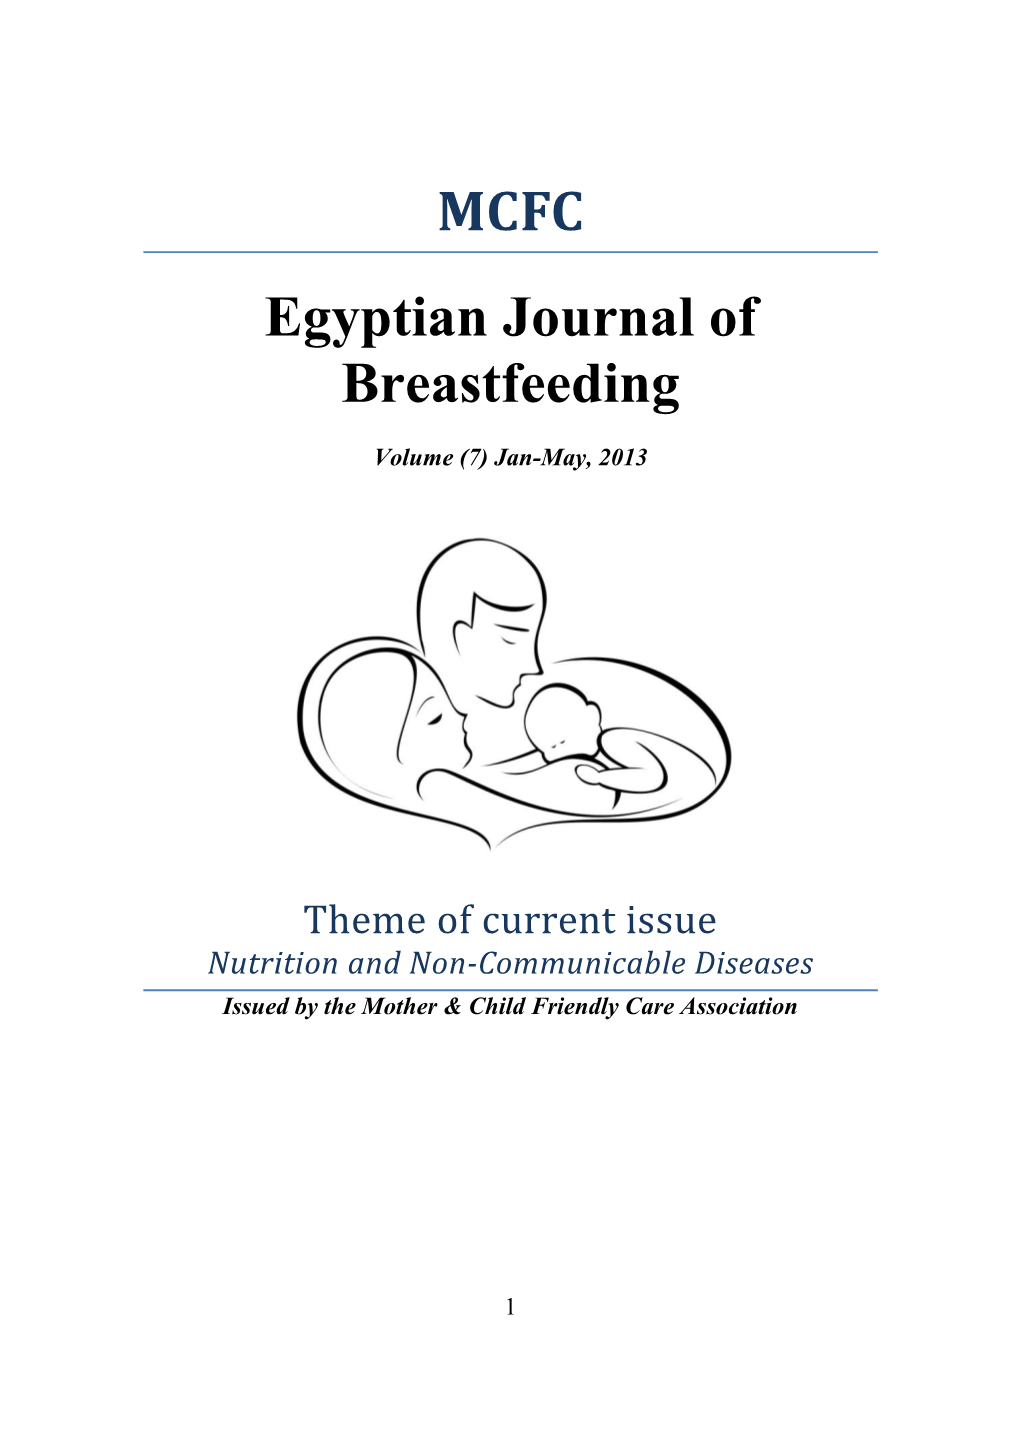 MCFC Egyptian Journal of Breastfeeding